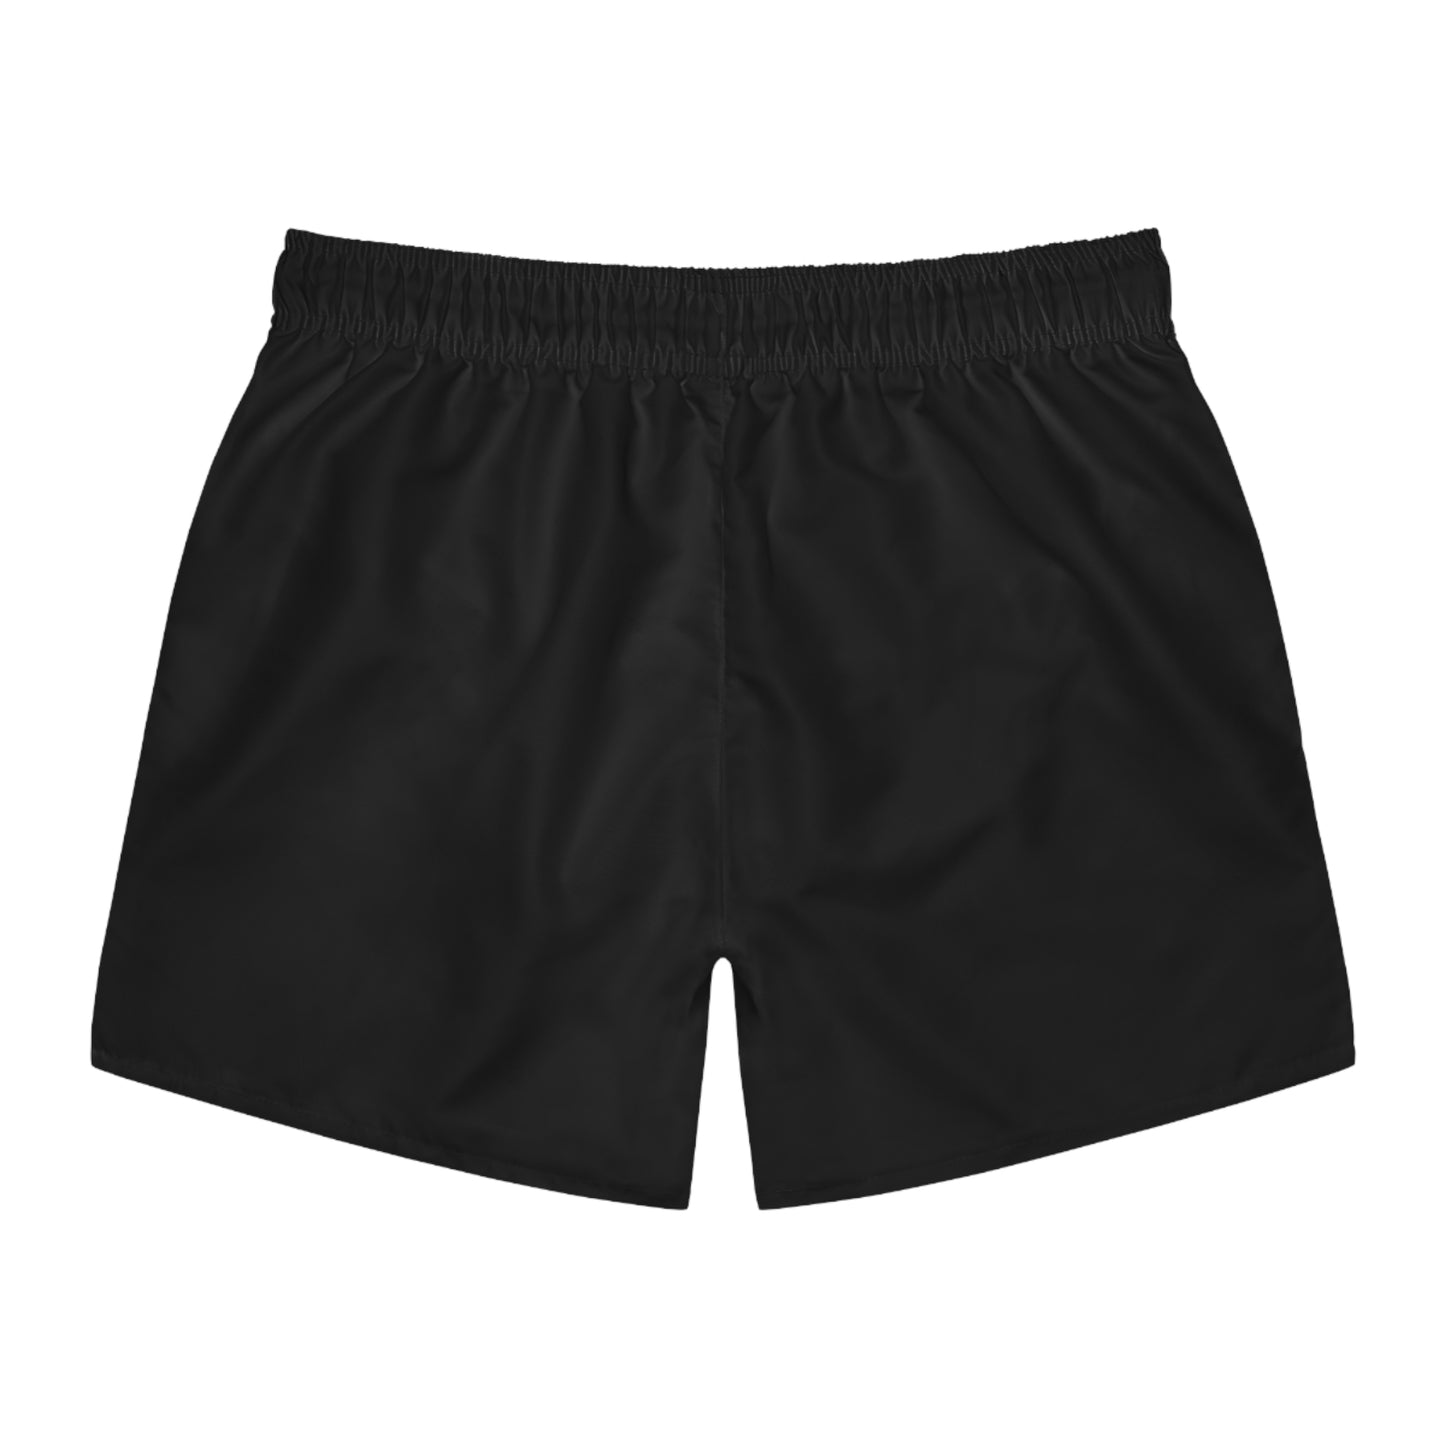 Keevo Certified - Jab Jab Possee -  Men's Fete Shorts (black)